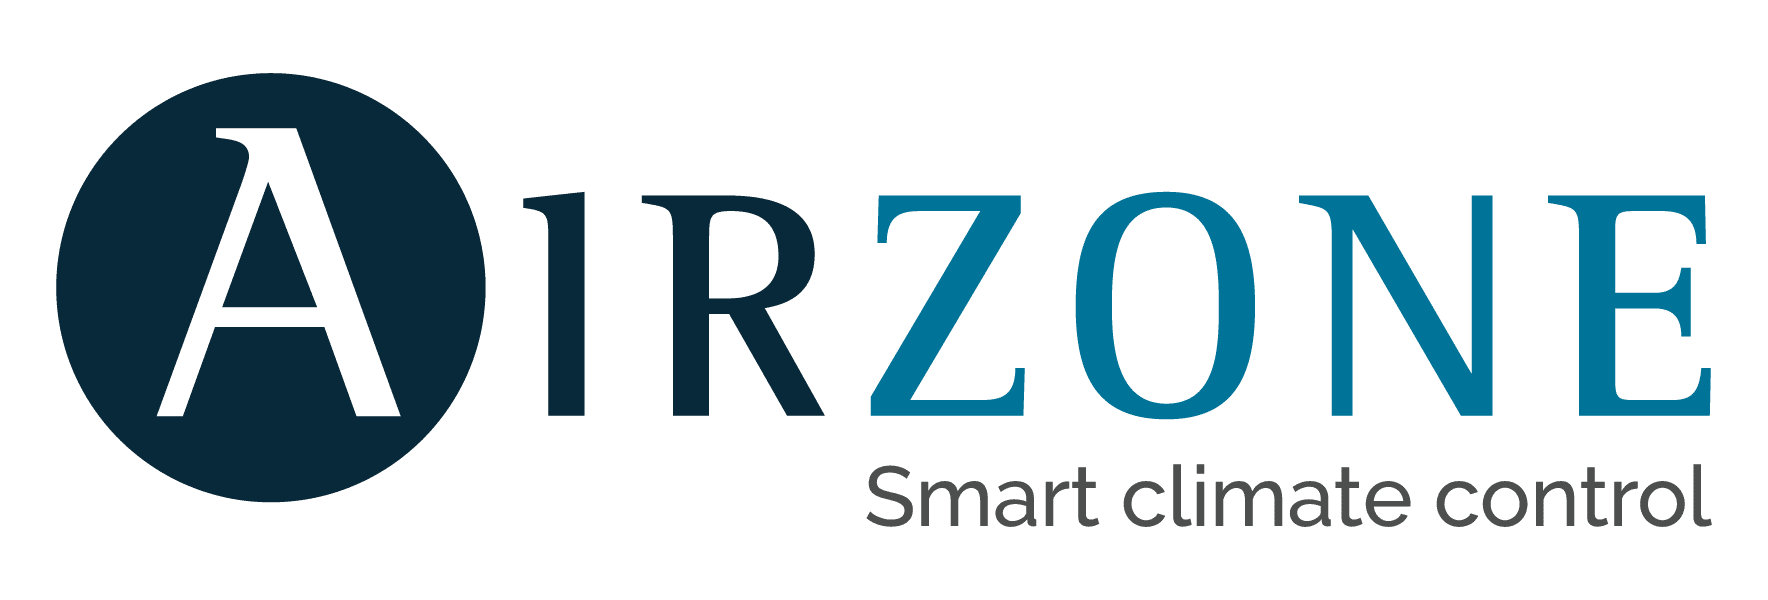 Airzone - Original Logo with Tagline